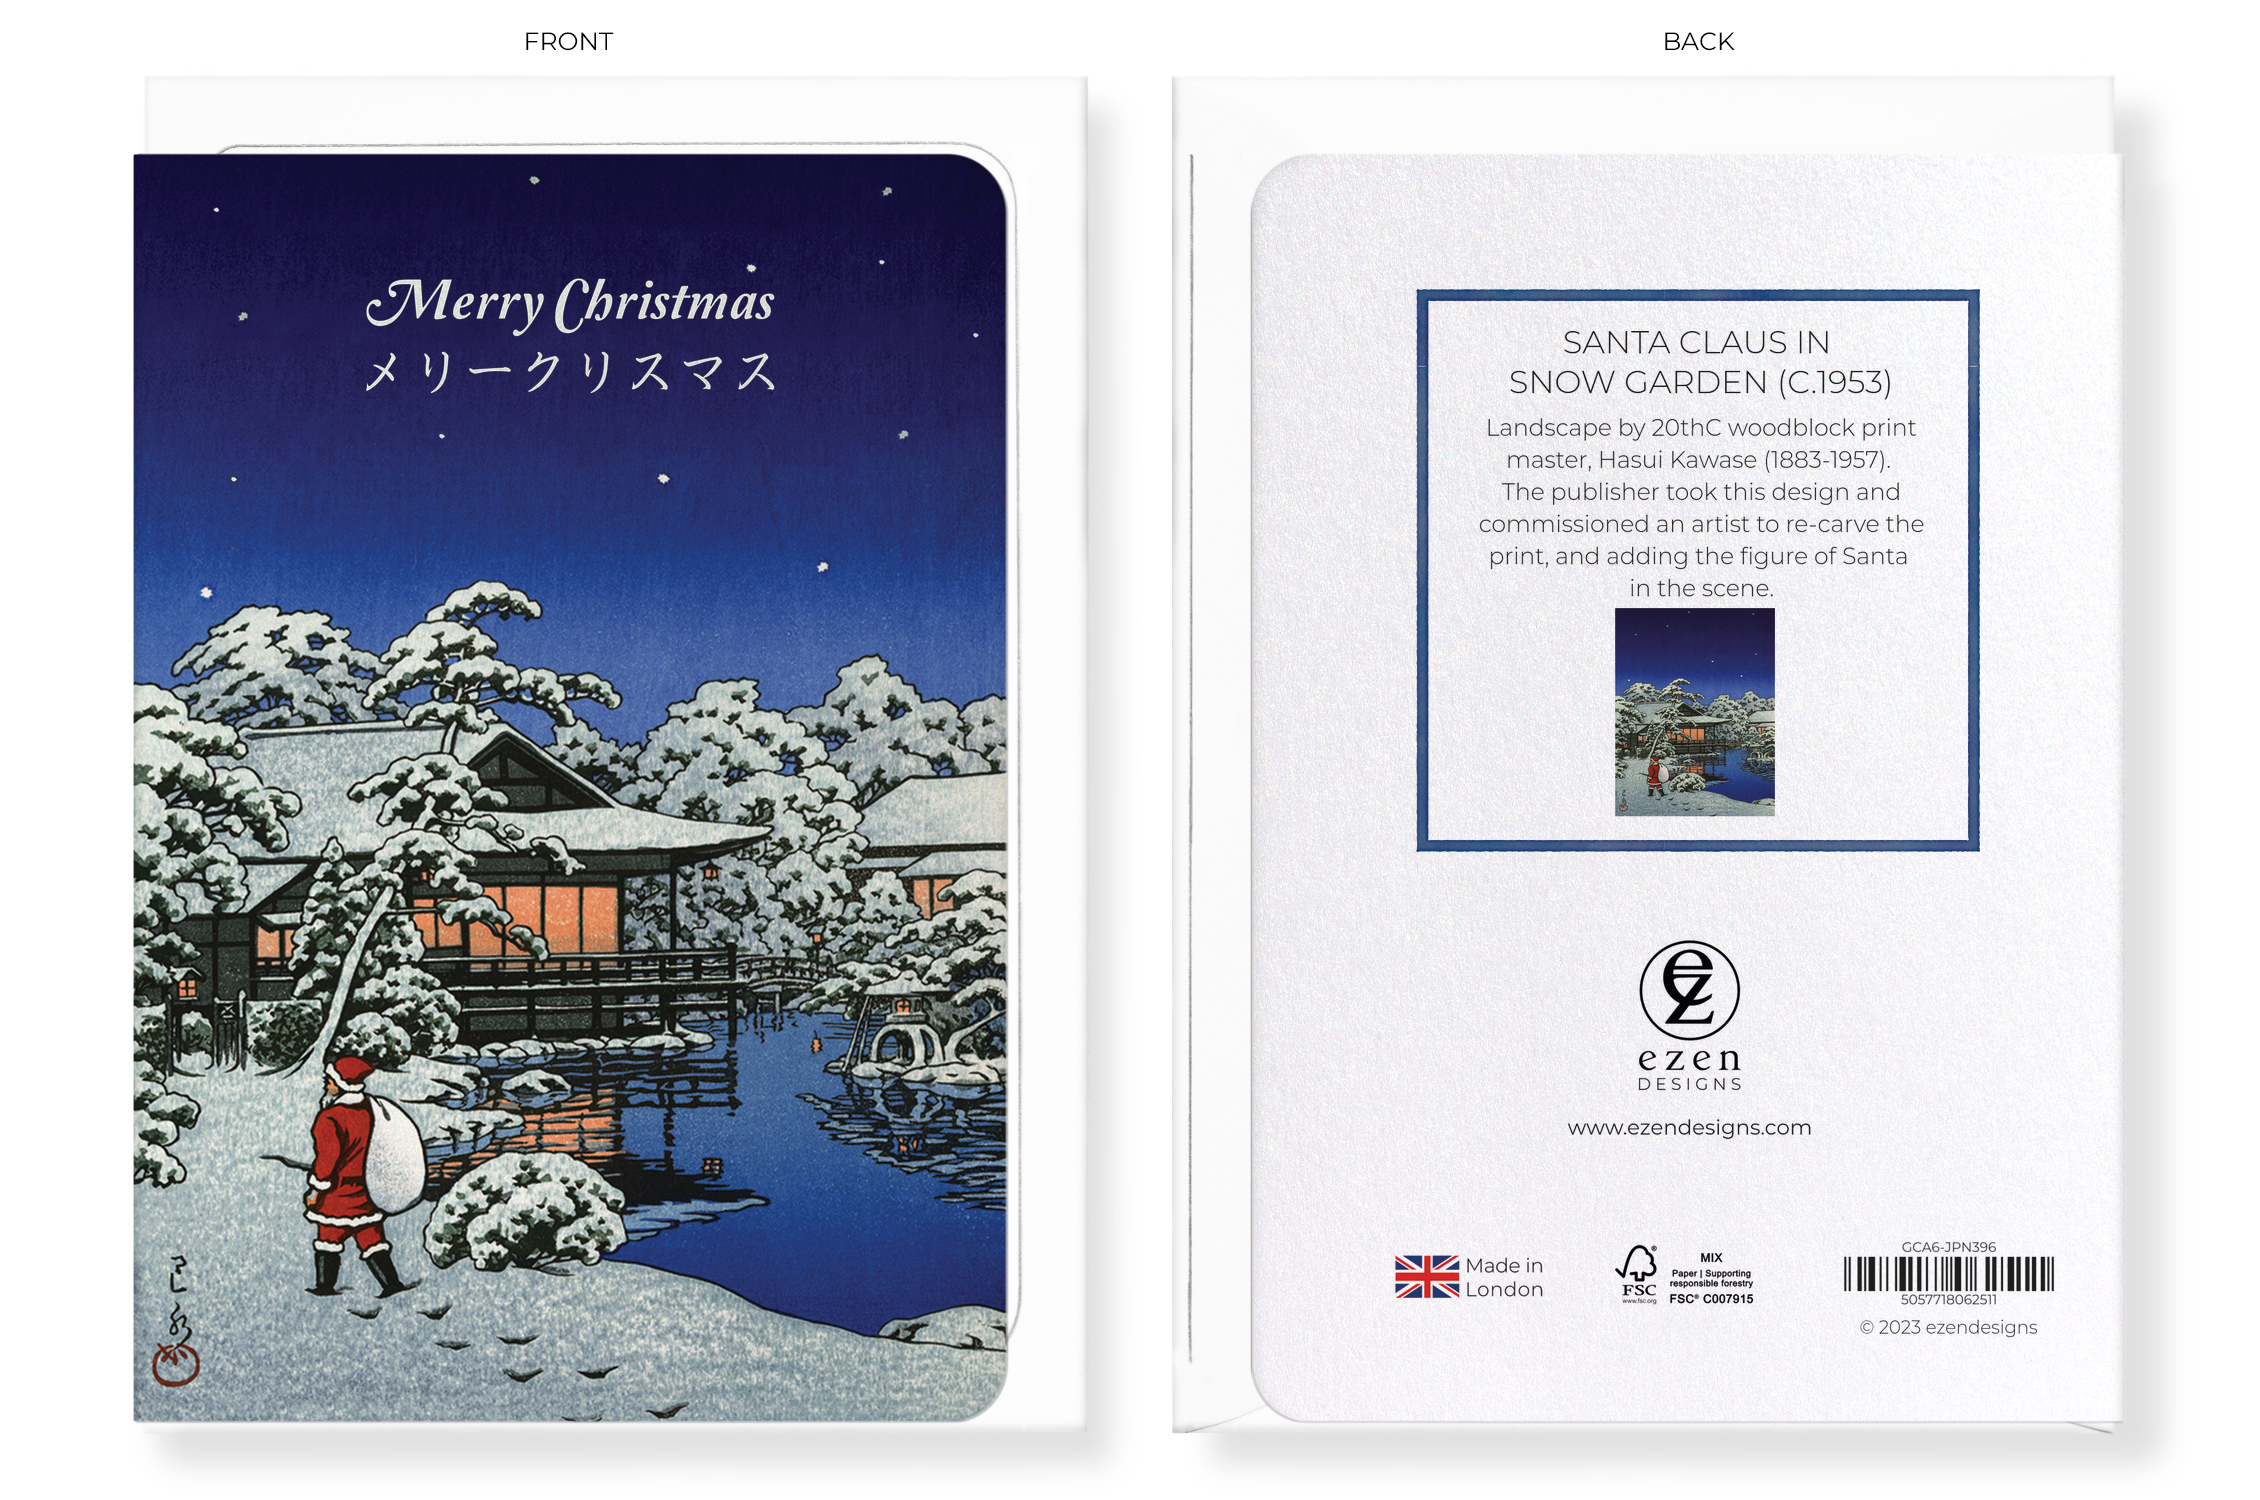 8 Cards - Japanese Christmas Designs